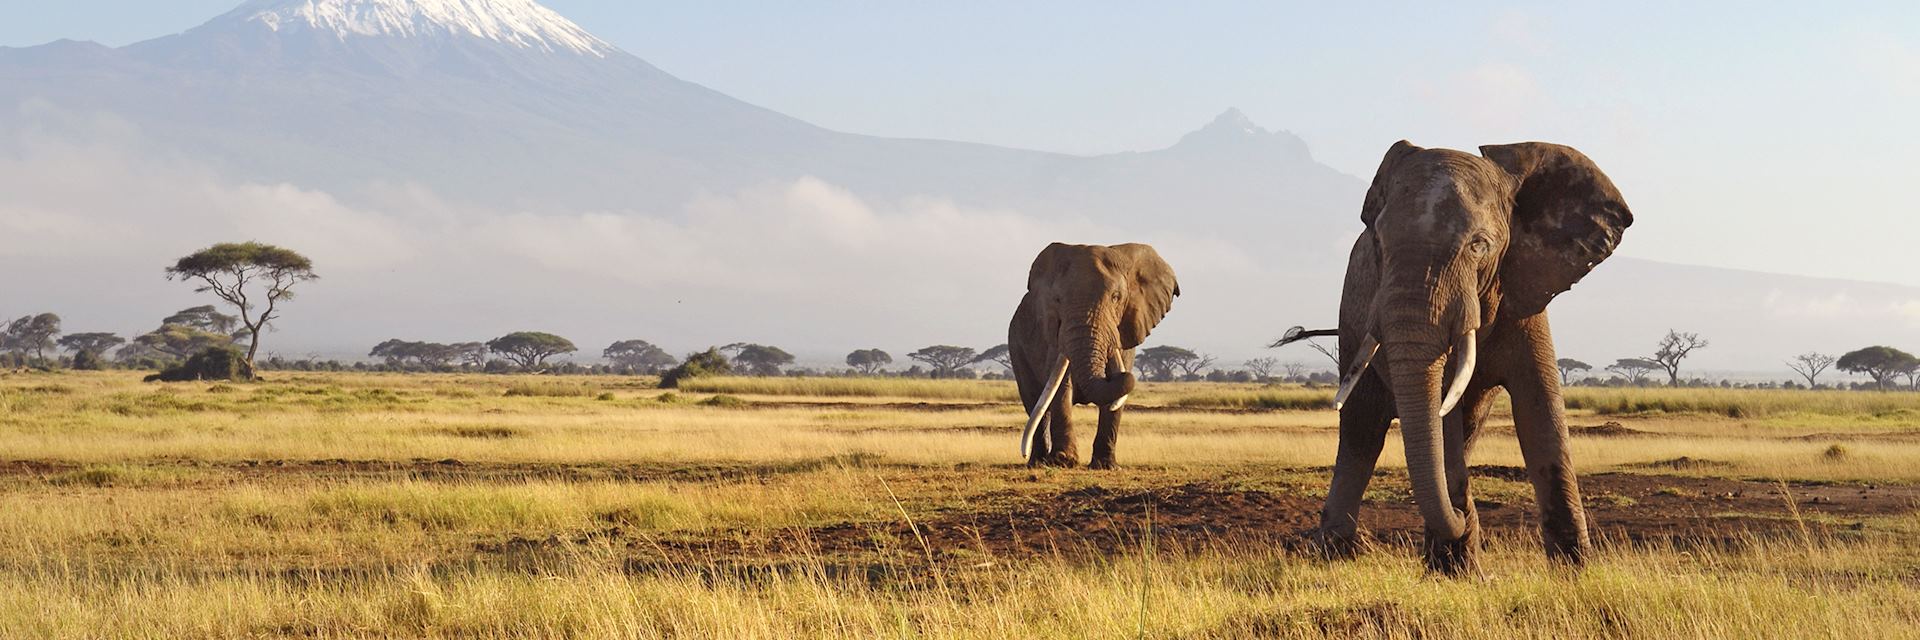 Elephants in the African savanna